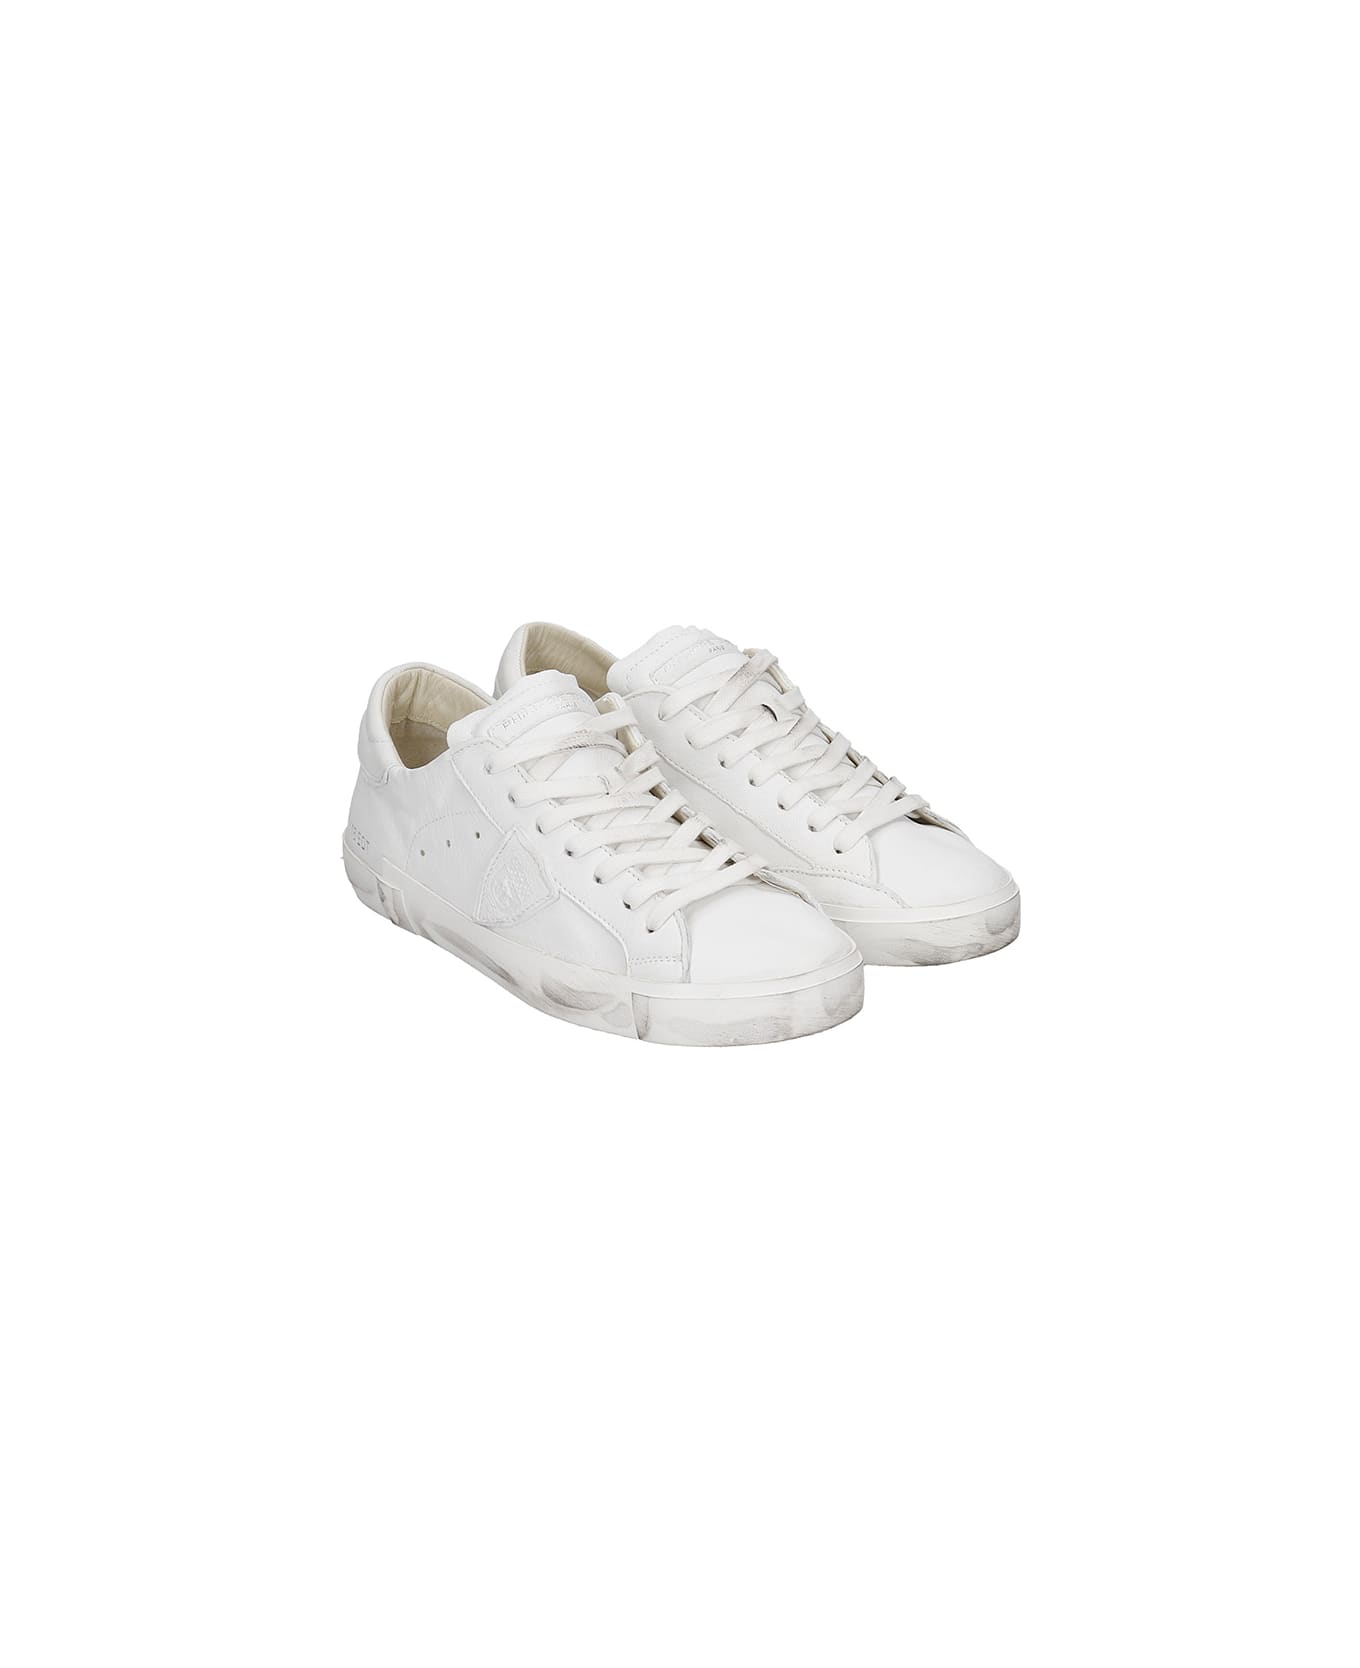 Philippe Model Prsx L Sneakers In White Leather - WHITE